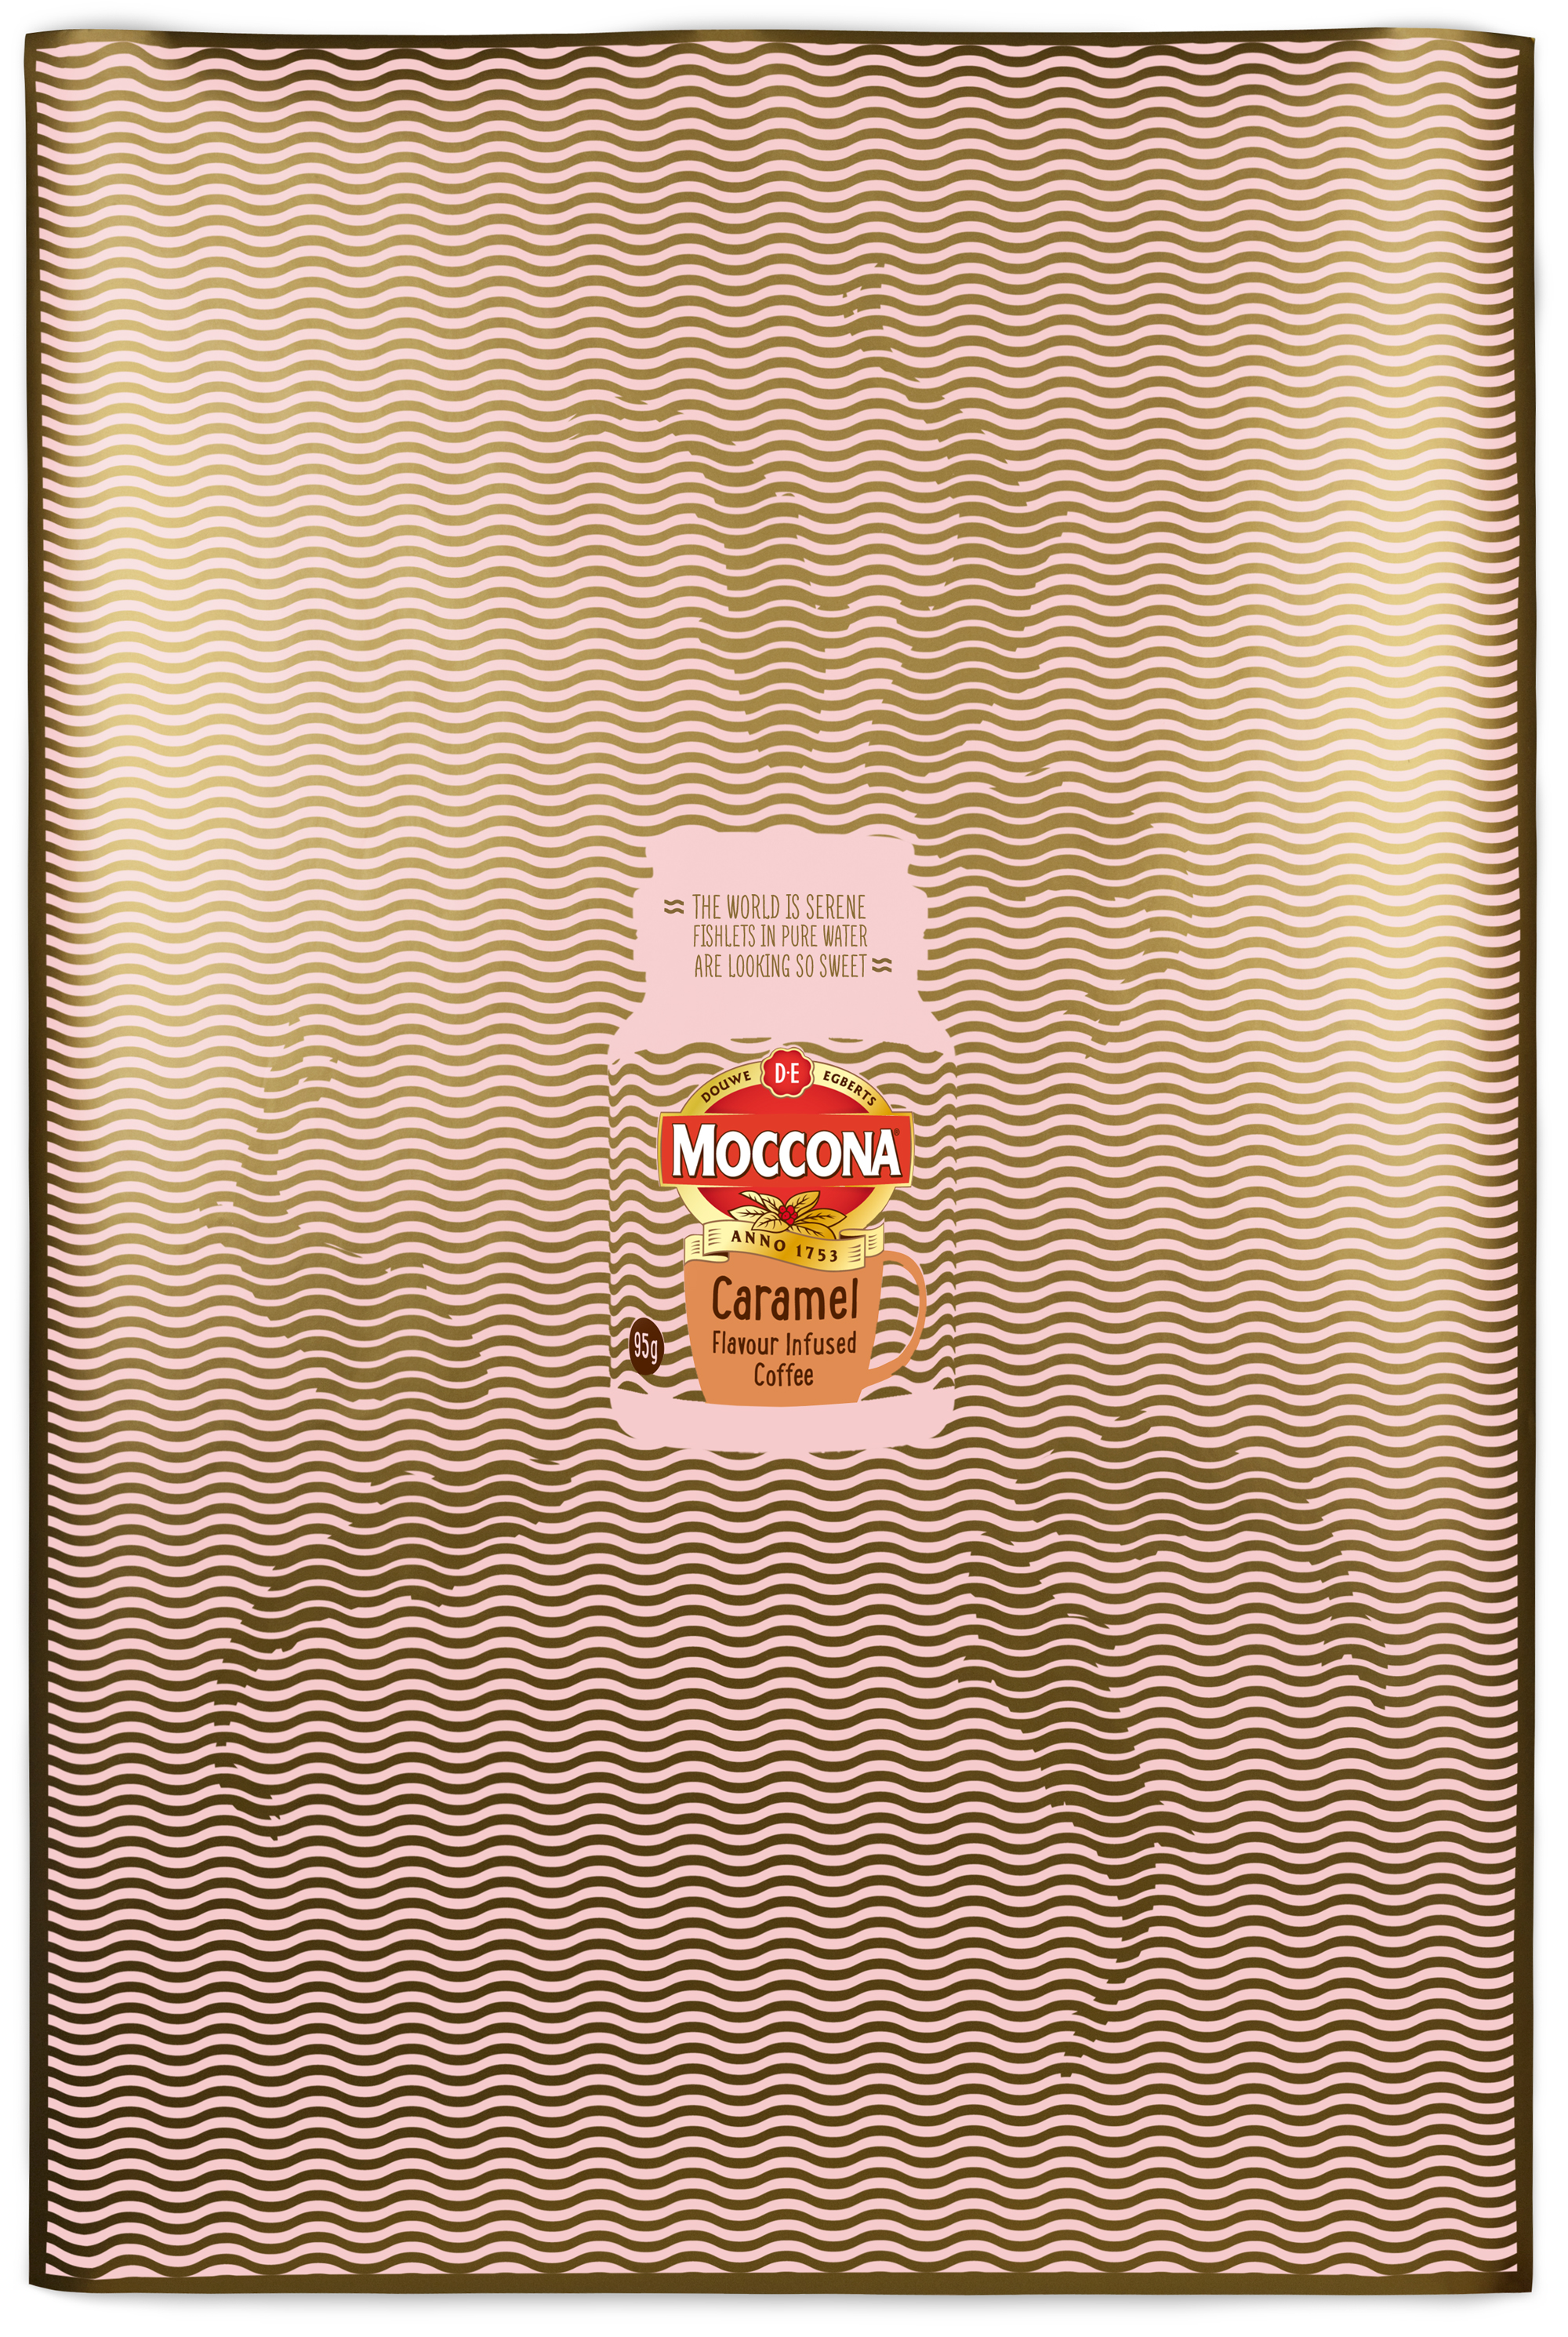 Moccona subtle posters, креатив, дизайн, реклама, продвижение бренда, брендинговое агентство Depot WPF